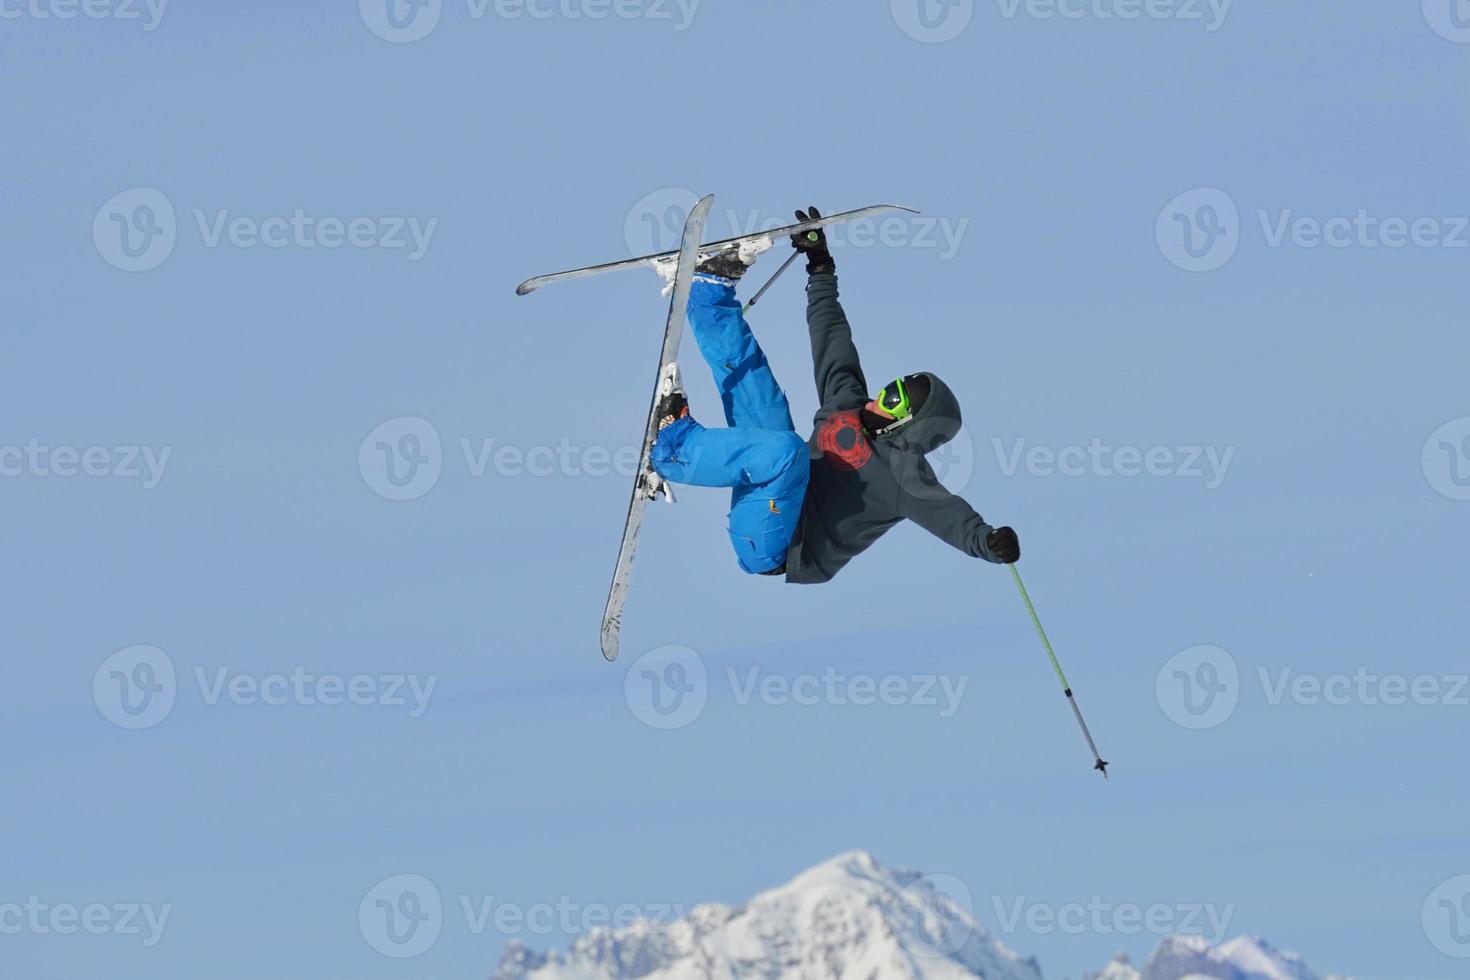 vista de salto de esqui foto